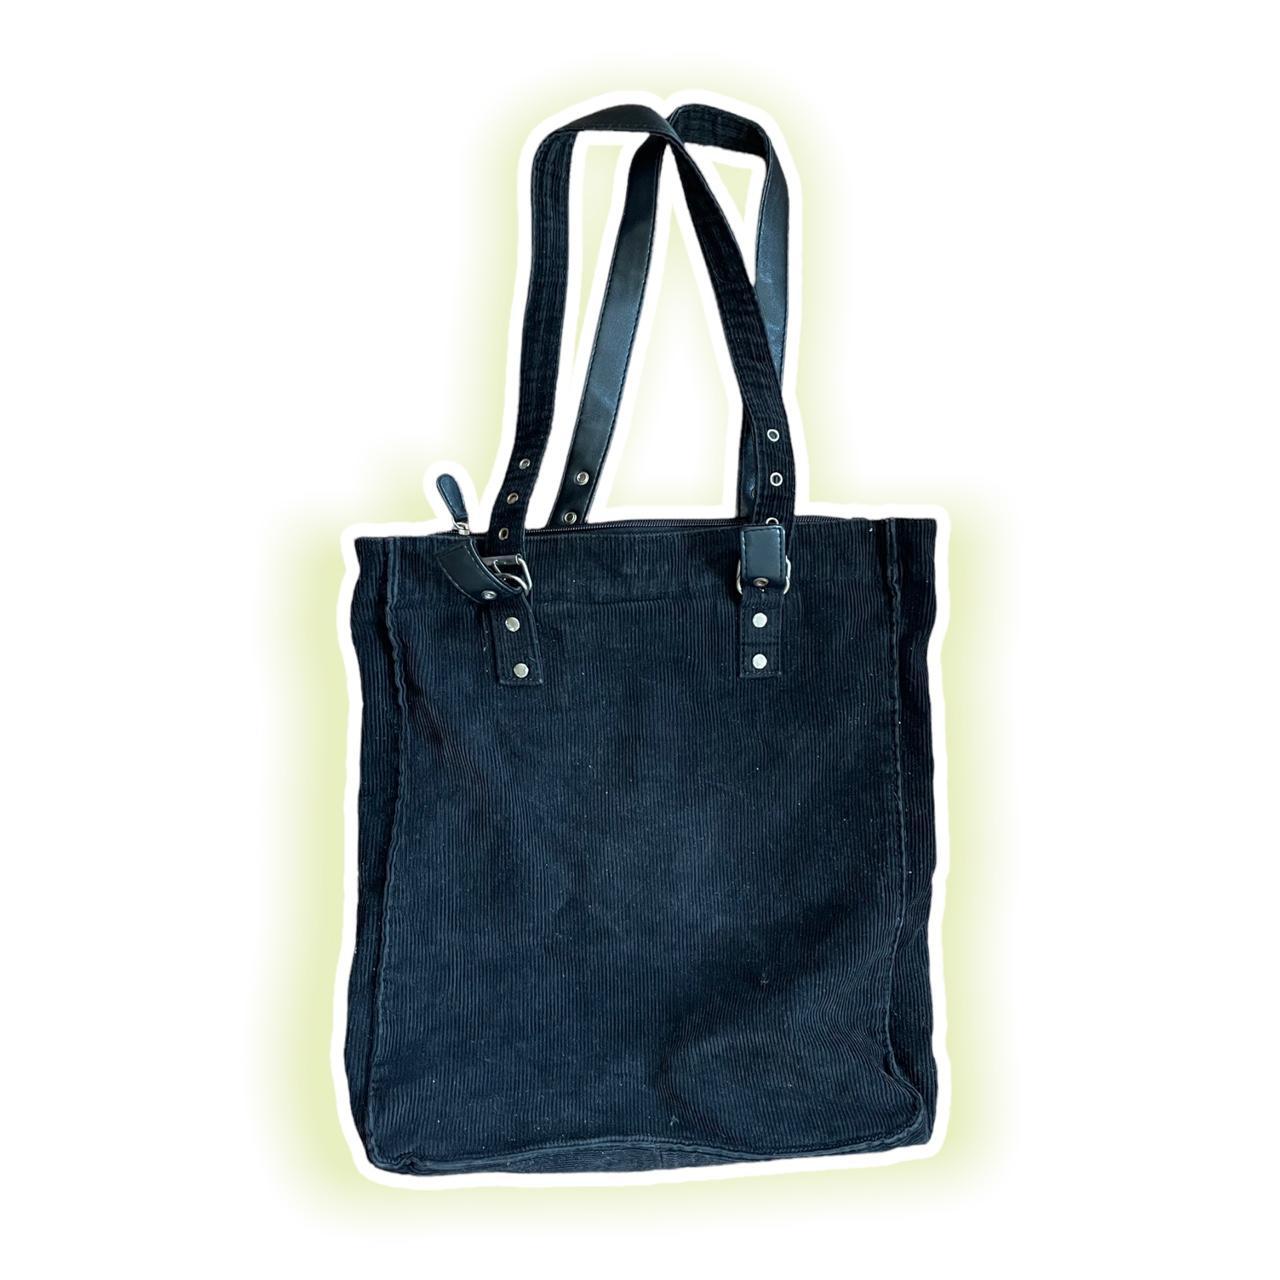 Corduroy tote style bag. Soft black cord handbag - Depop